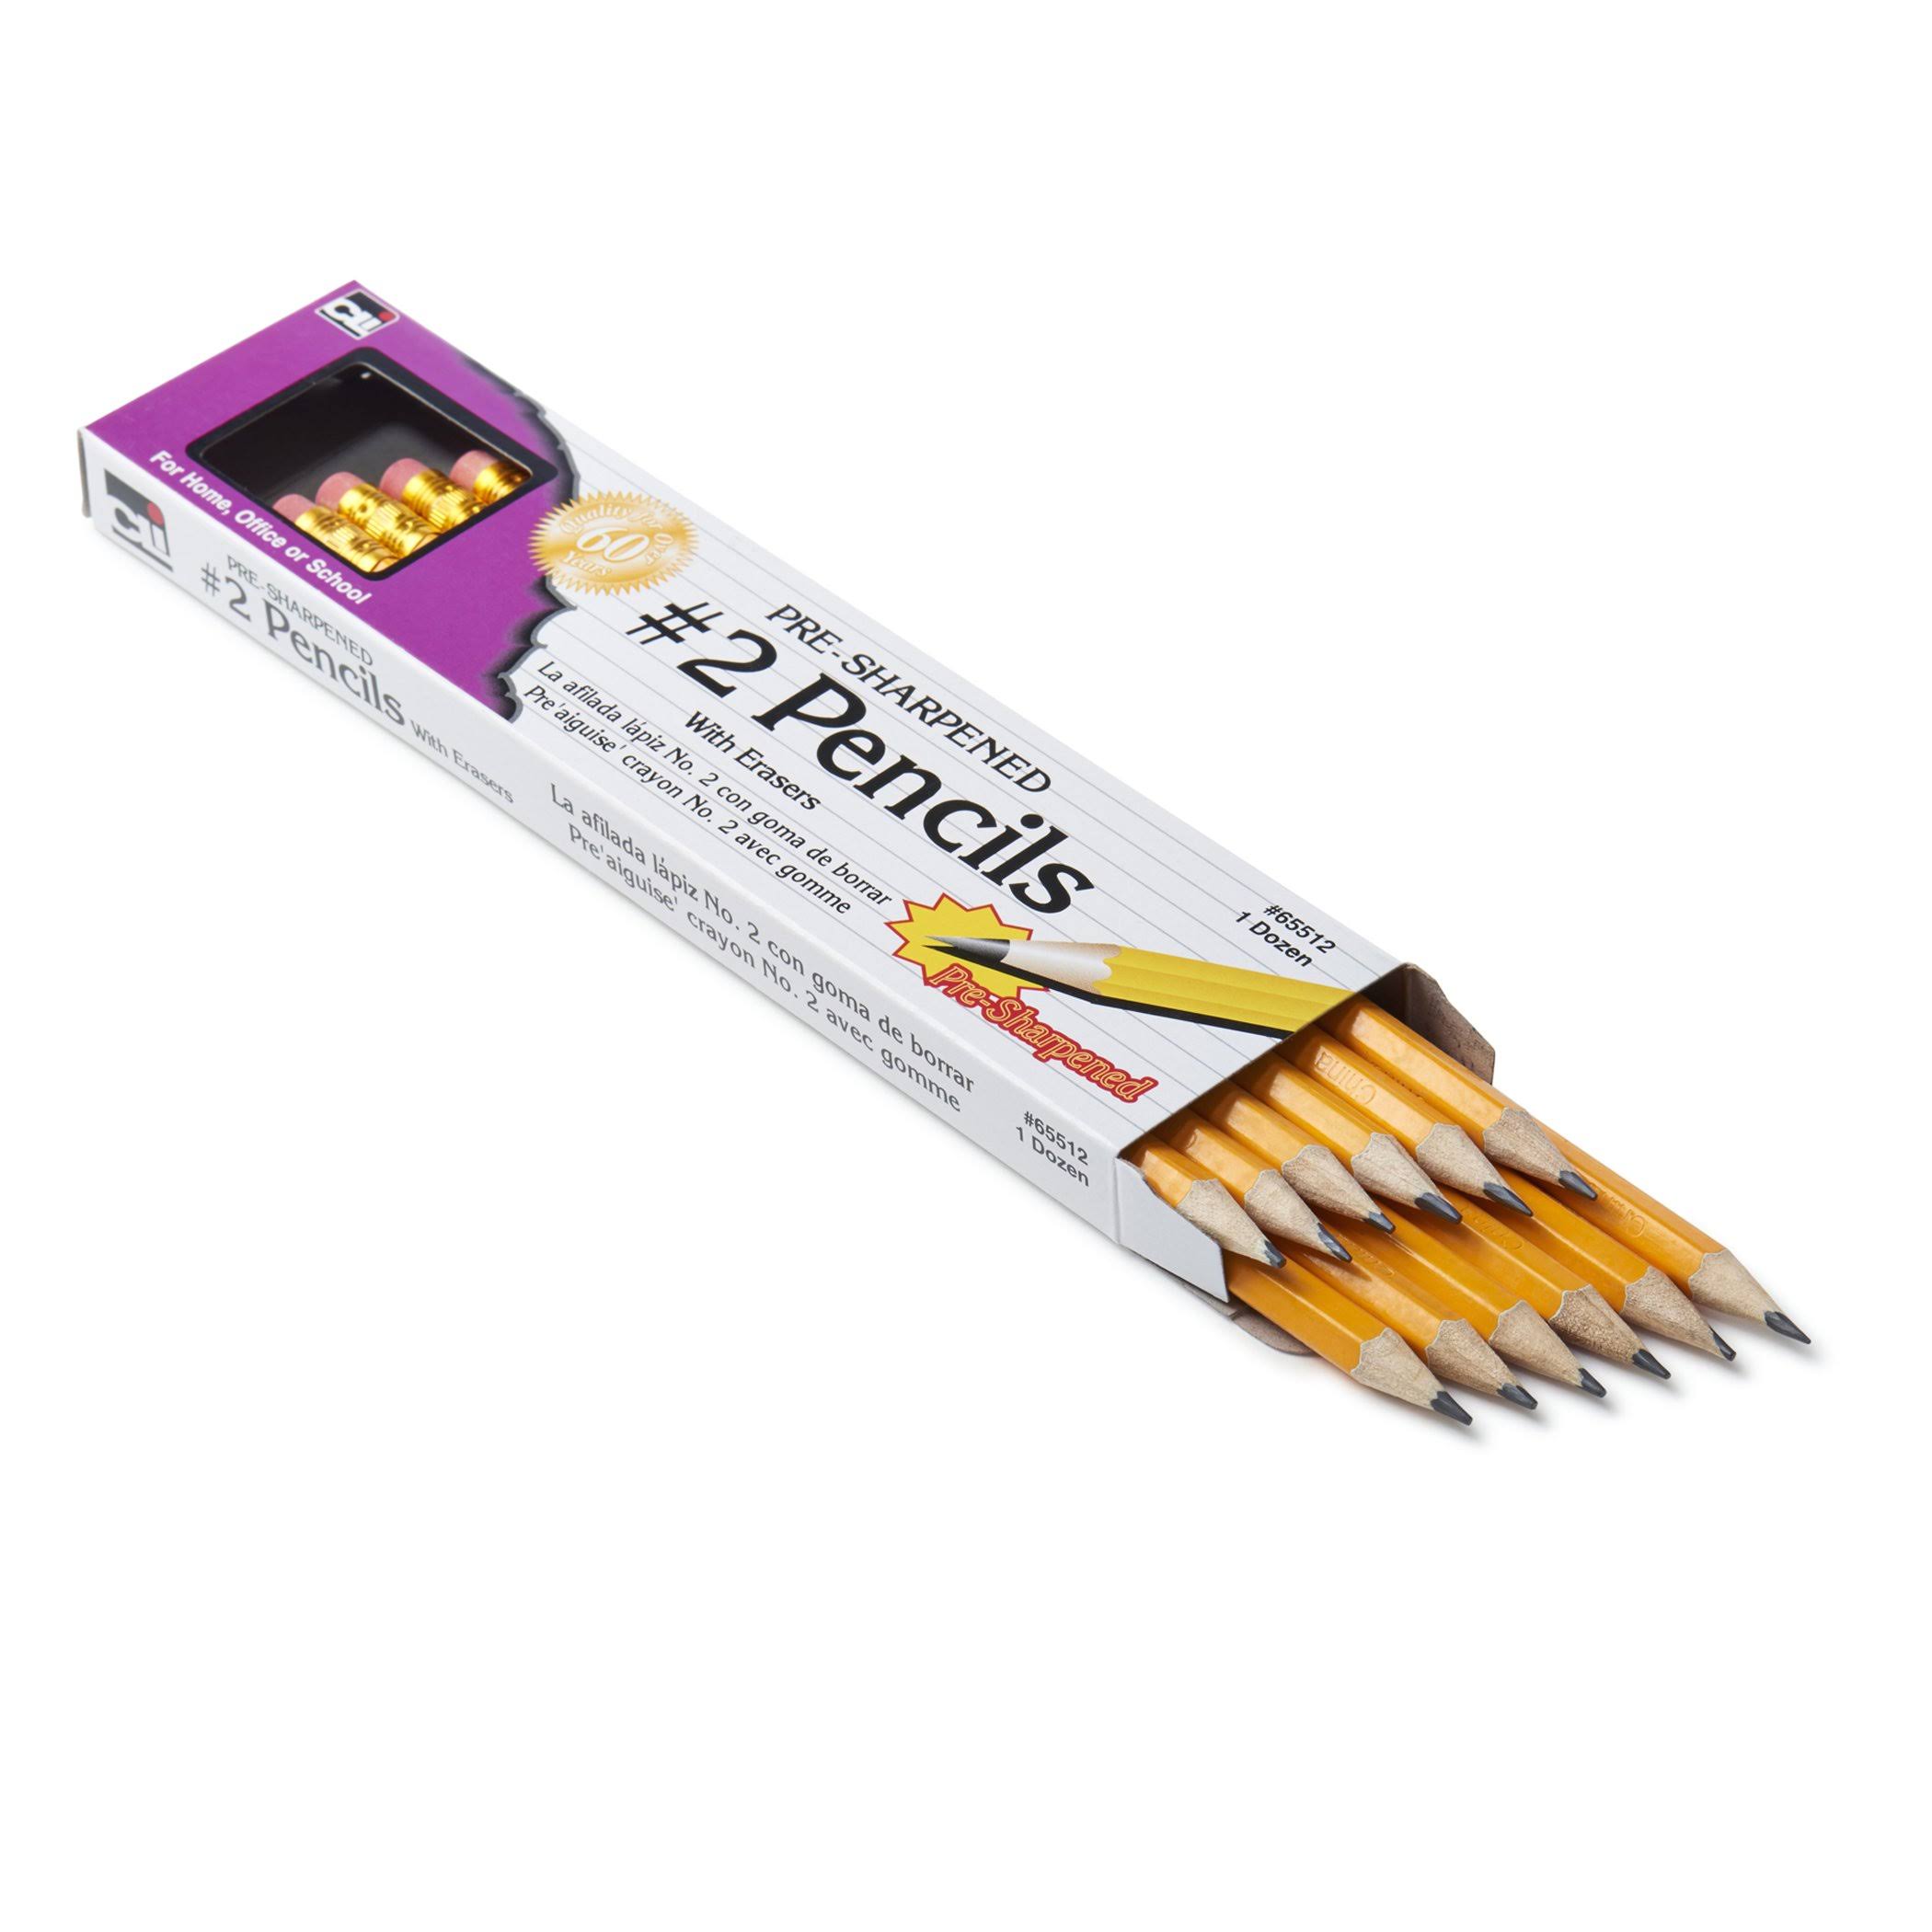 Charles Leonard Pencil #2 Lead - Pre-sharpened, with Eraser